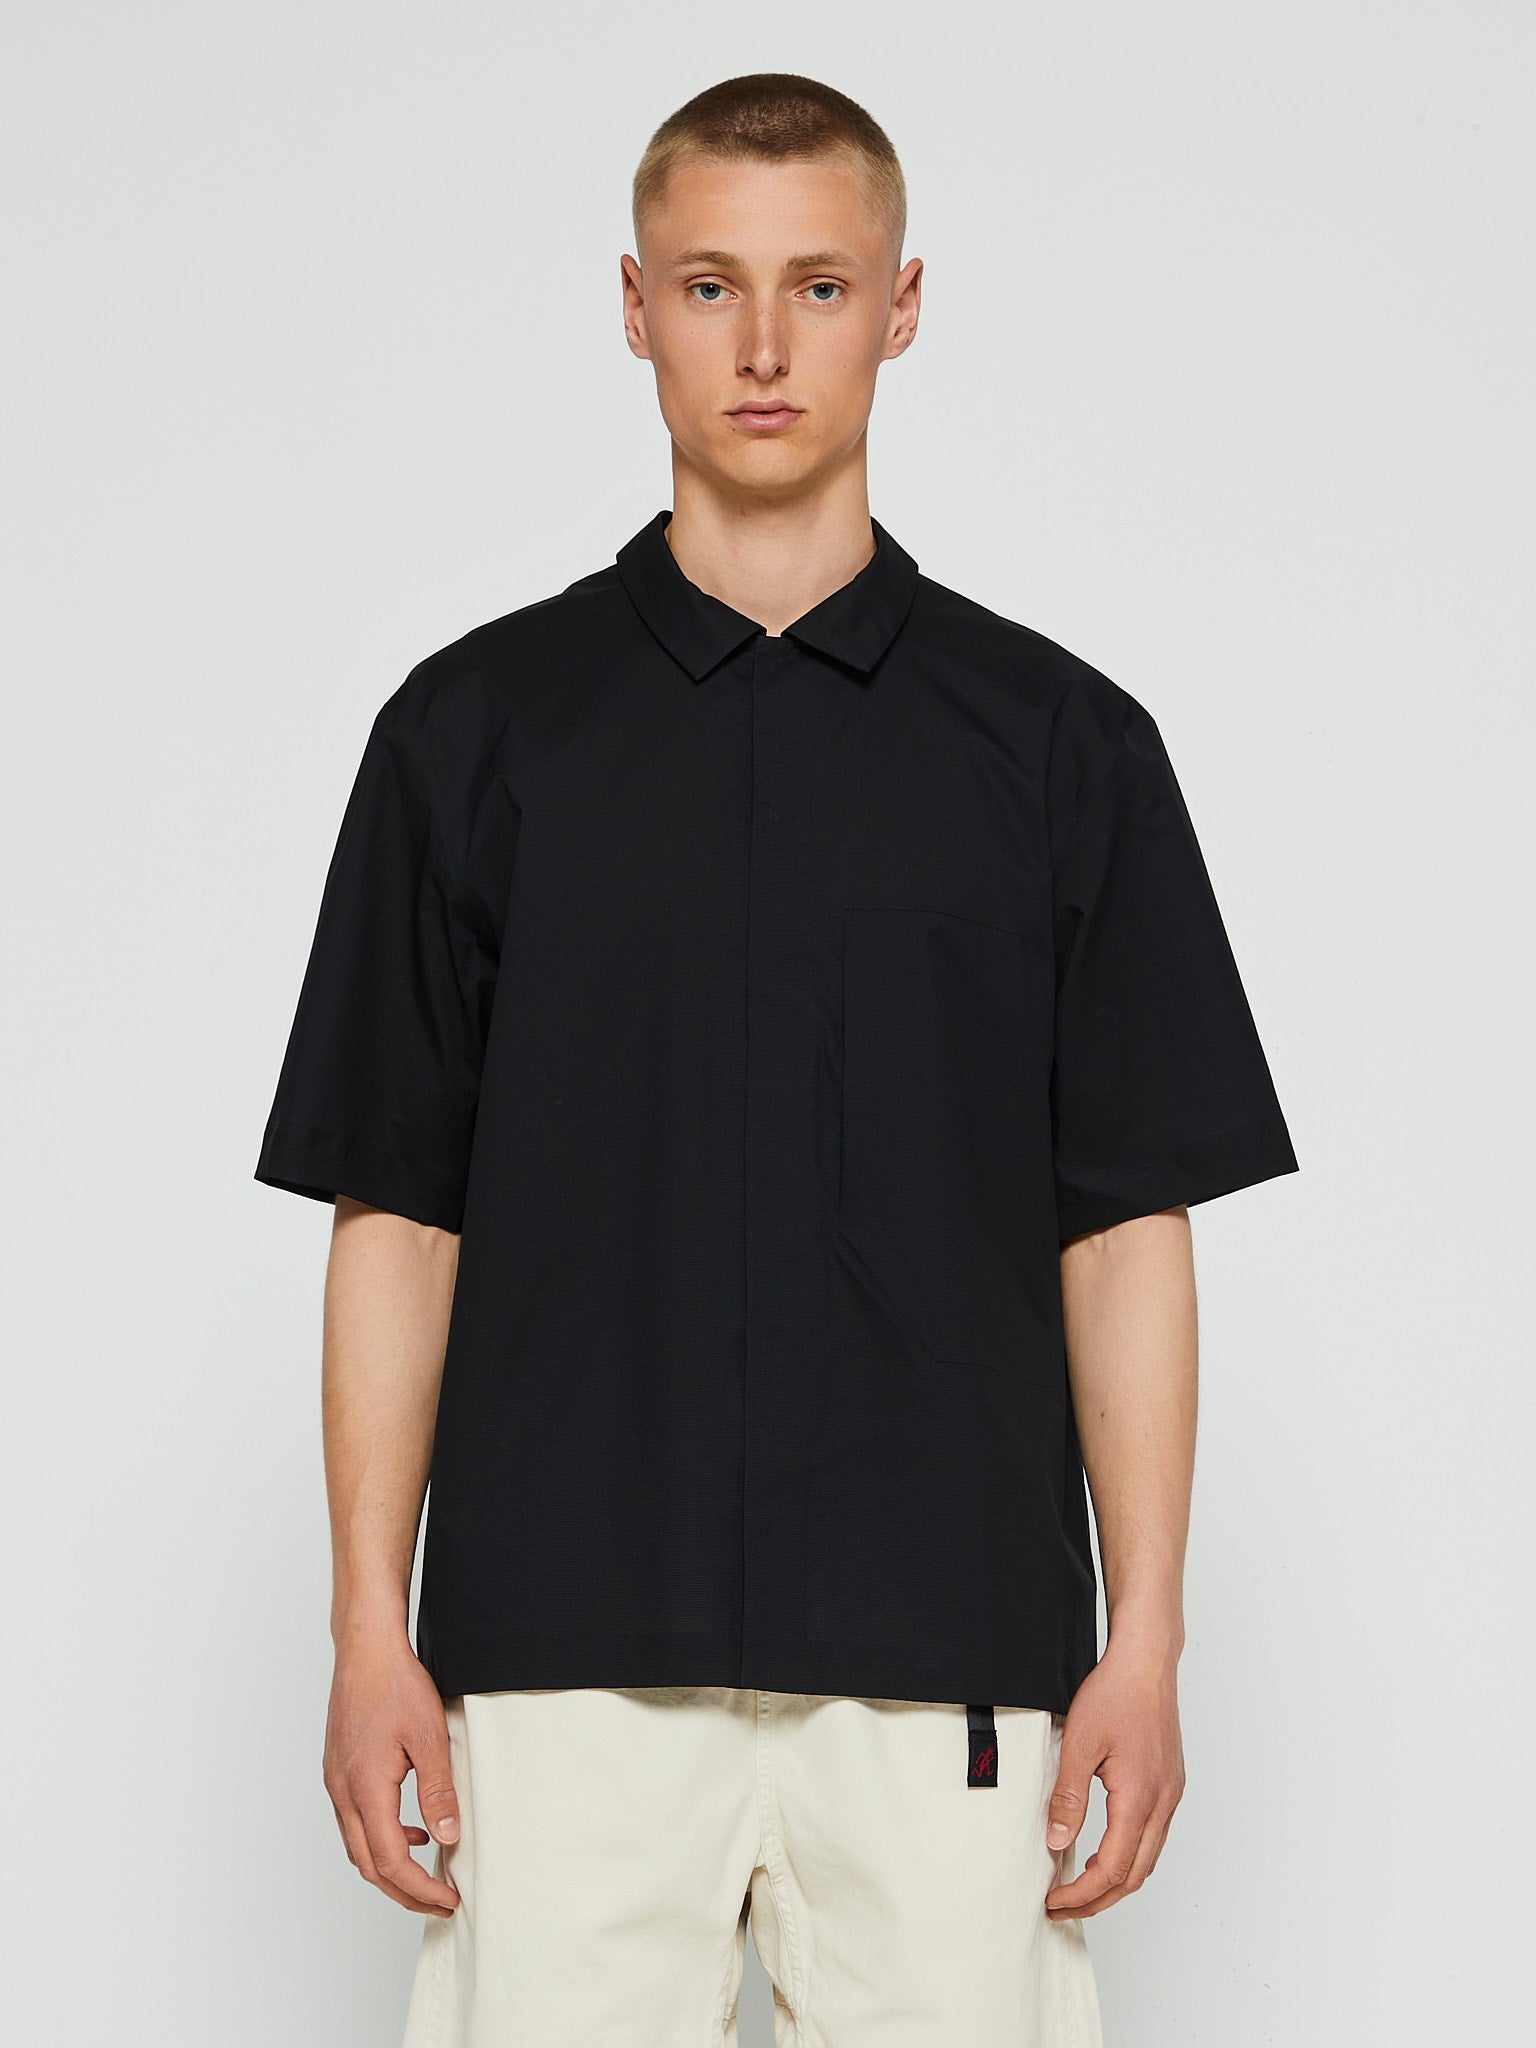 Arc'teryx Veilance - Demlo Short Sleeved Shirt in Black